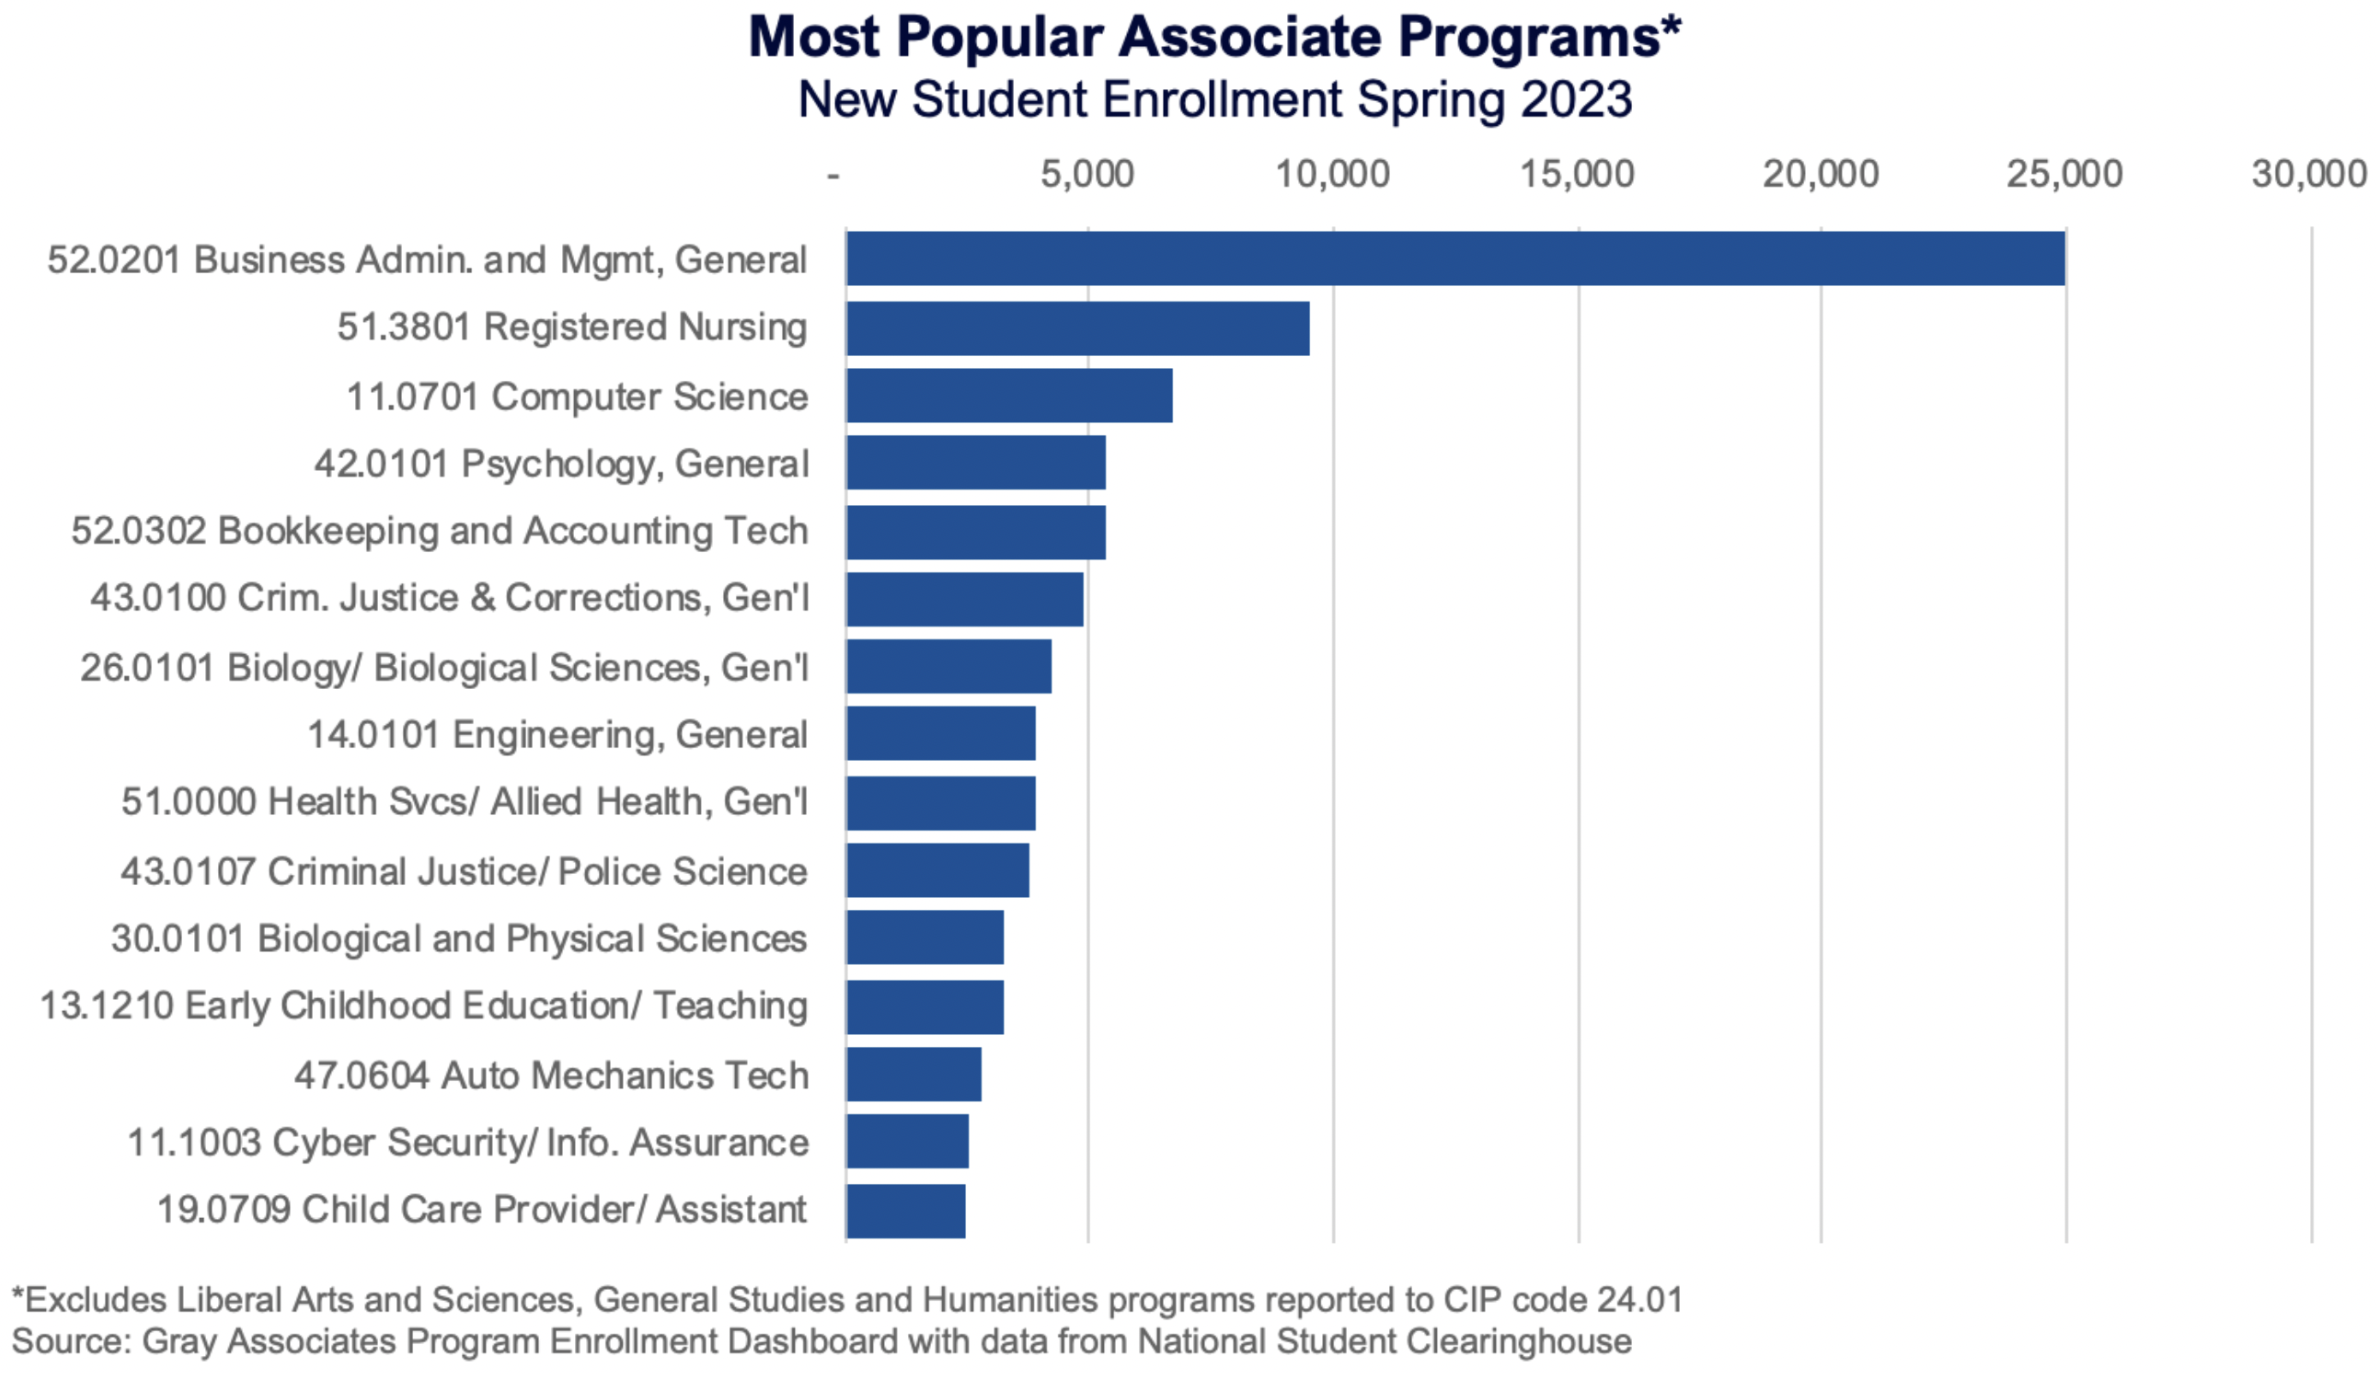 Most Popular Associate Programs * (New Student enrollment Spring 2023)